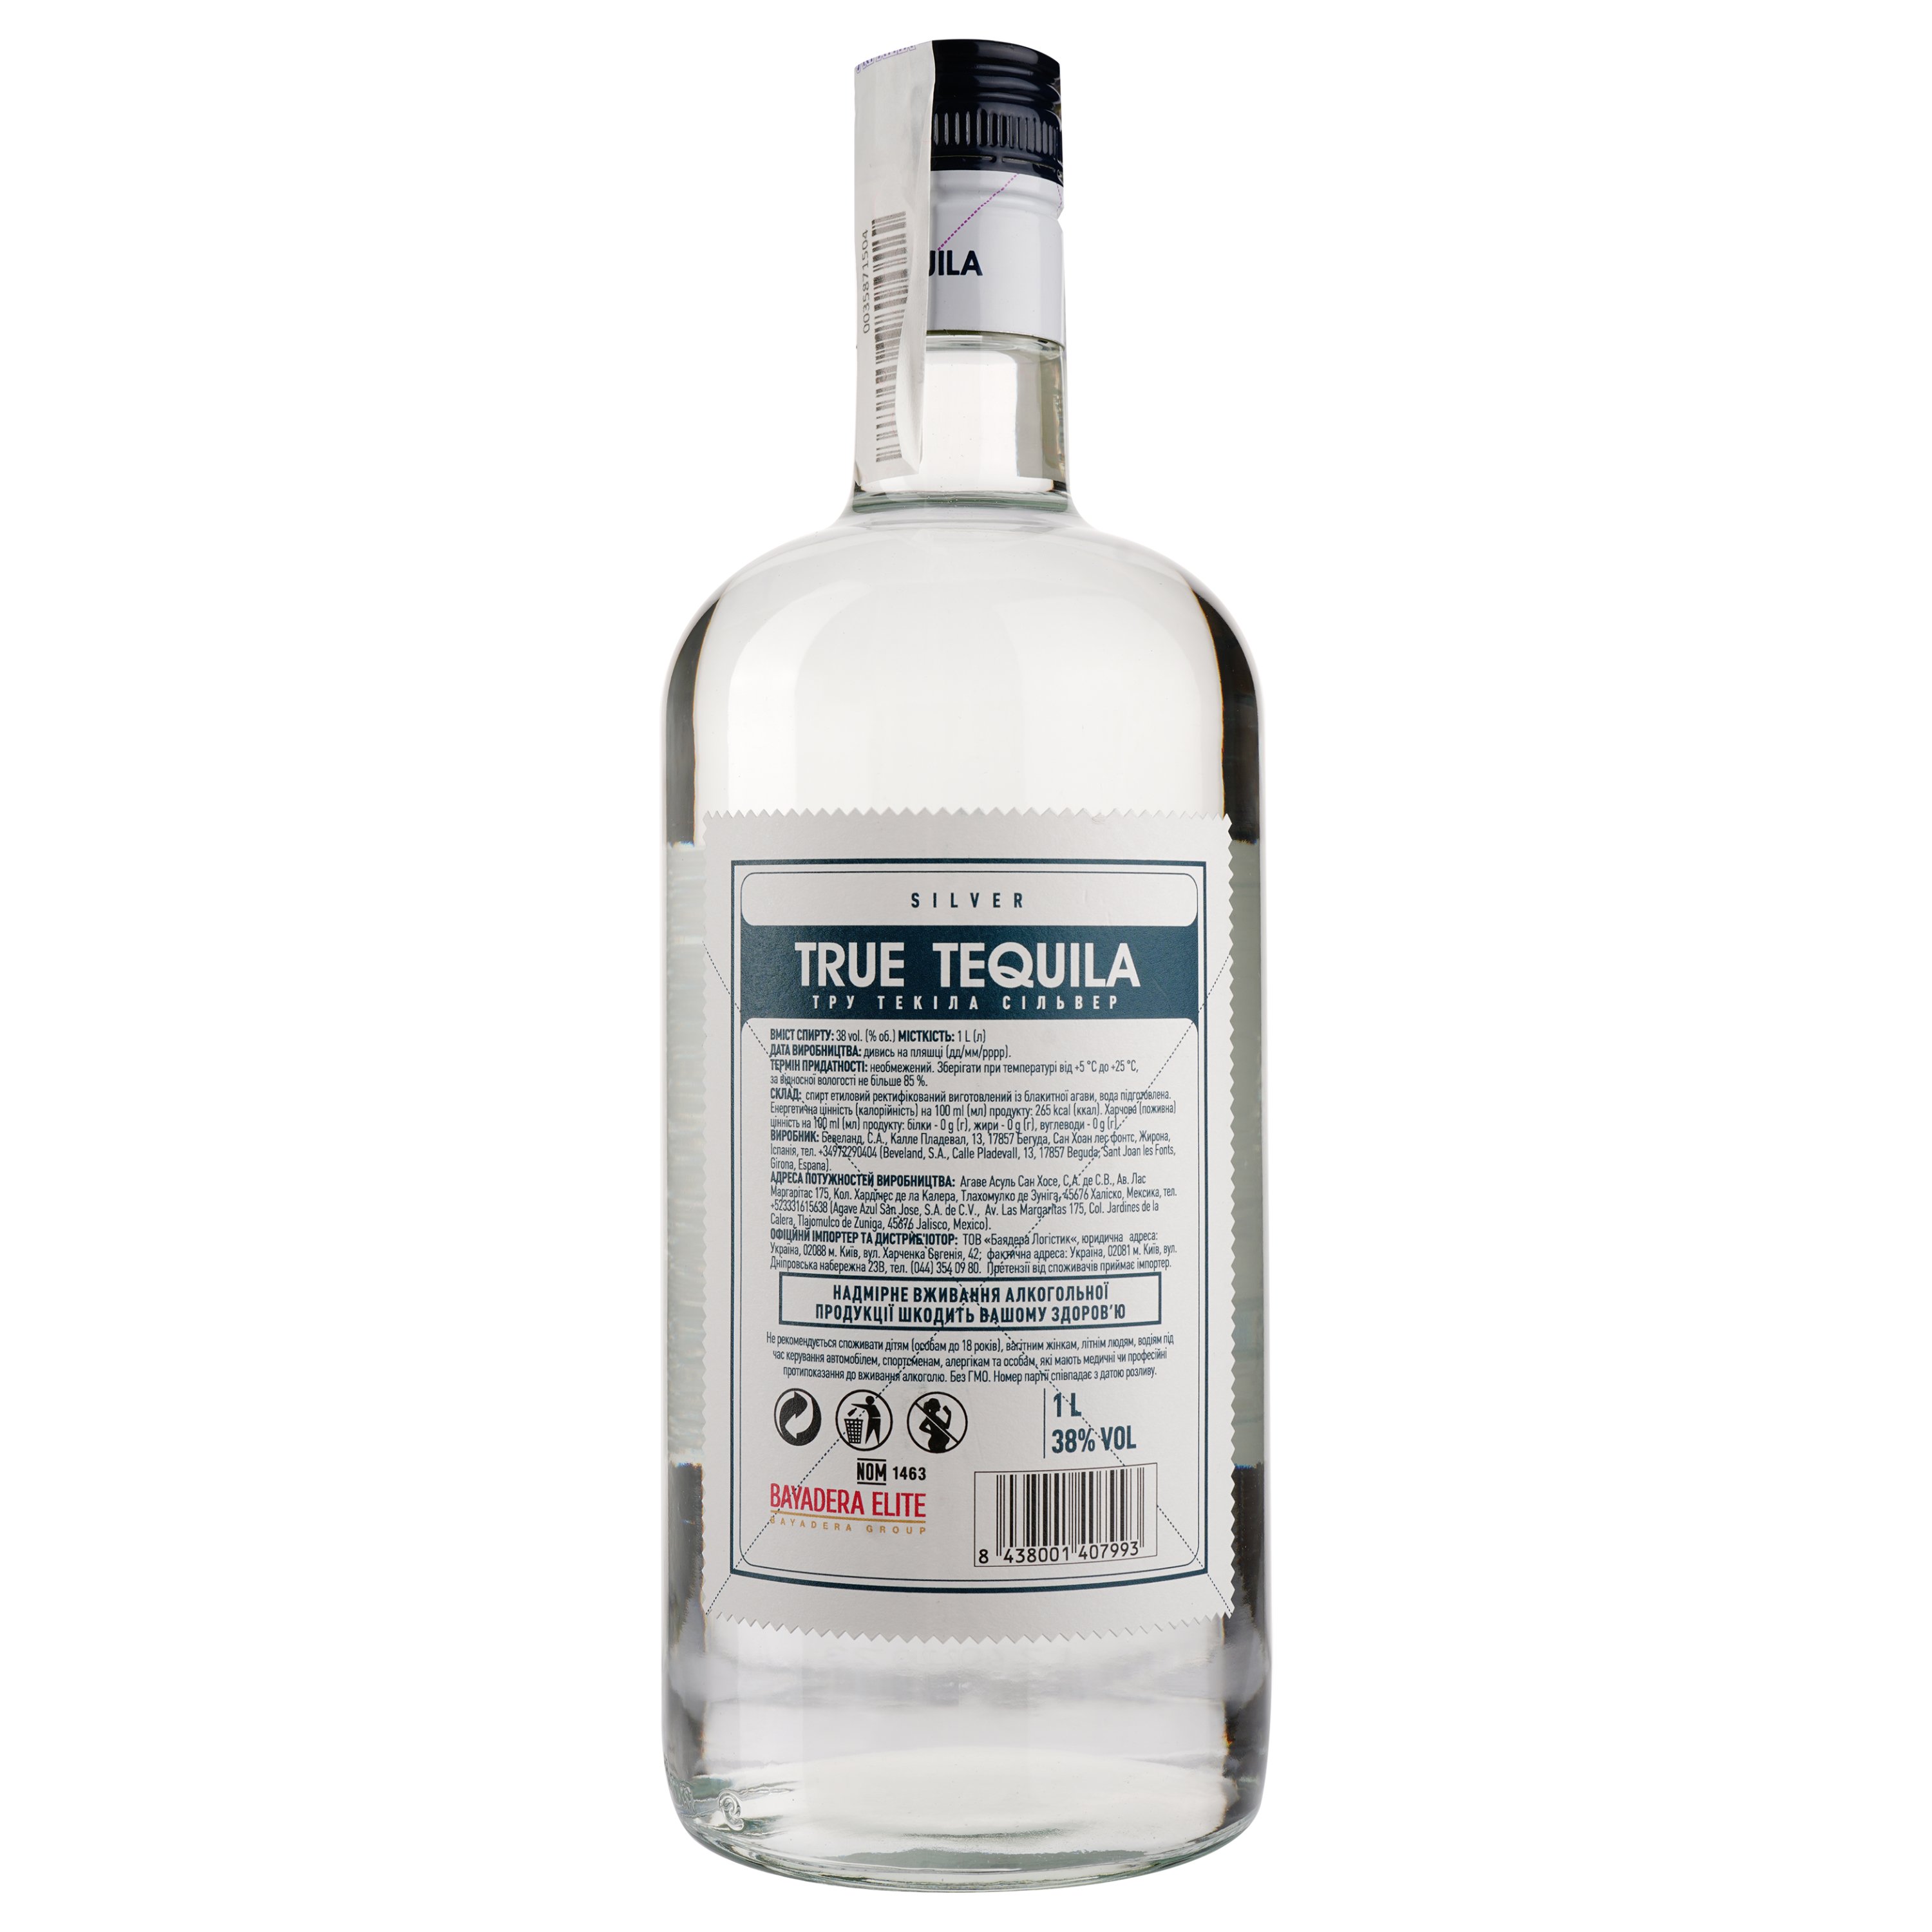 Текила True Tequila Silver new, 38%, 1 л - фото 2